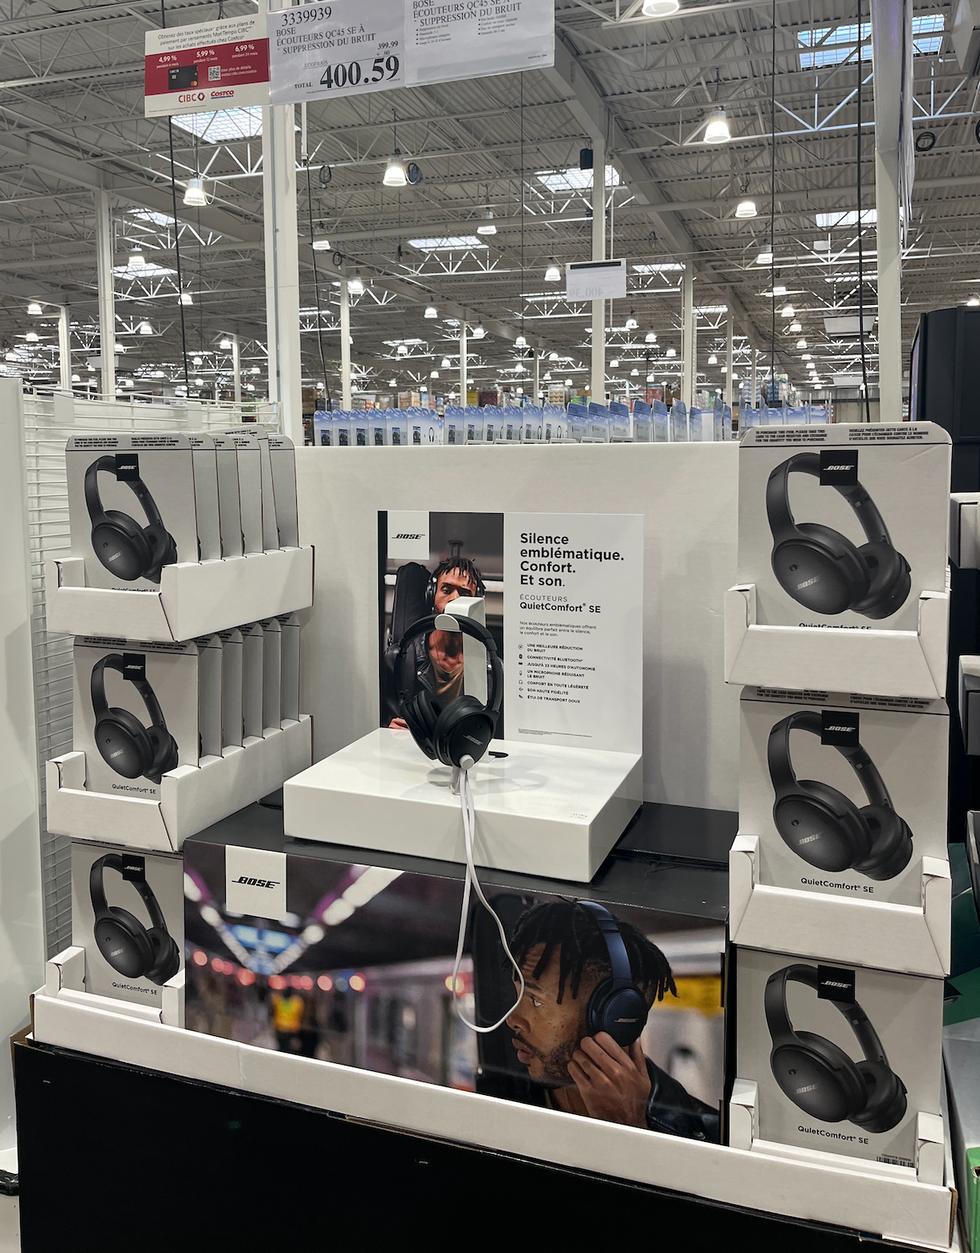 Bose headphones at Costco.